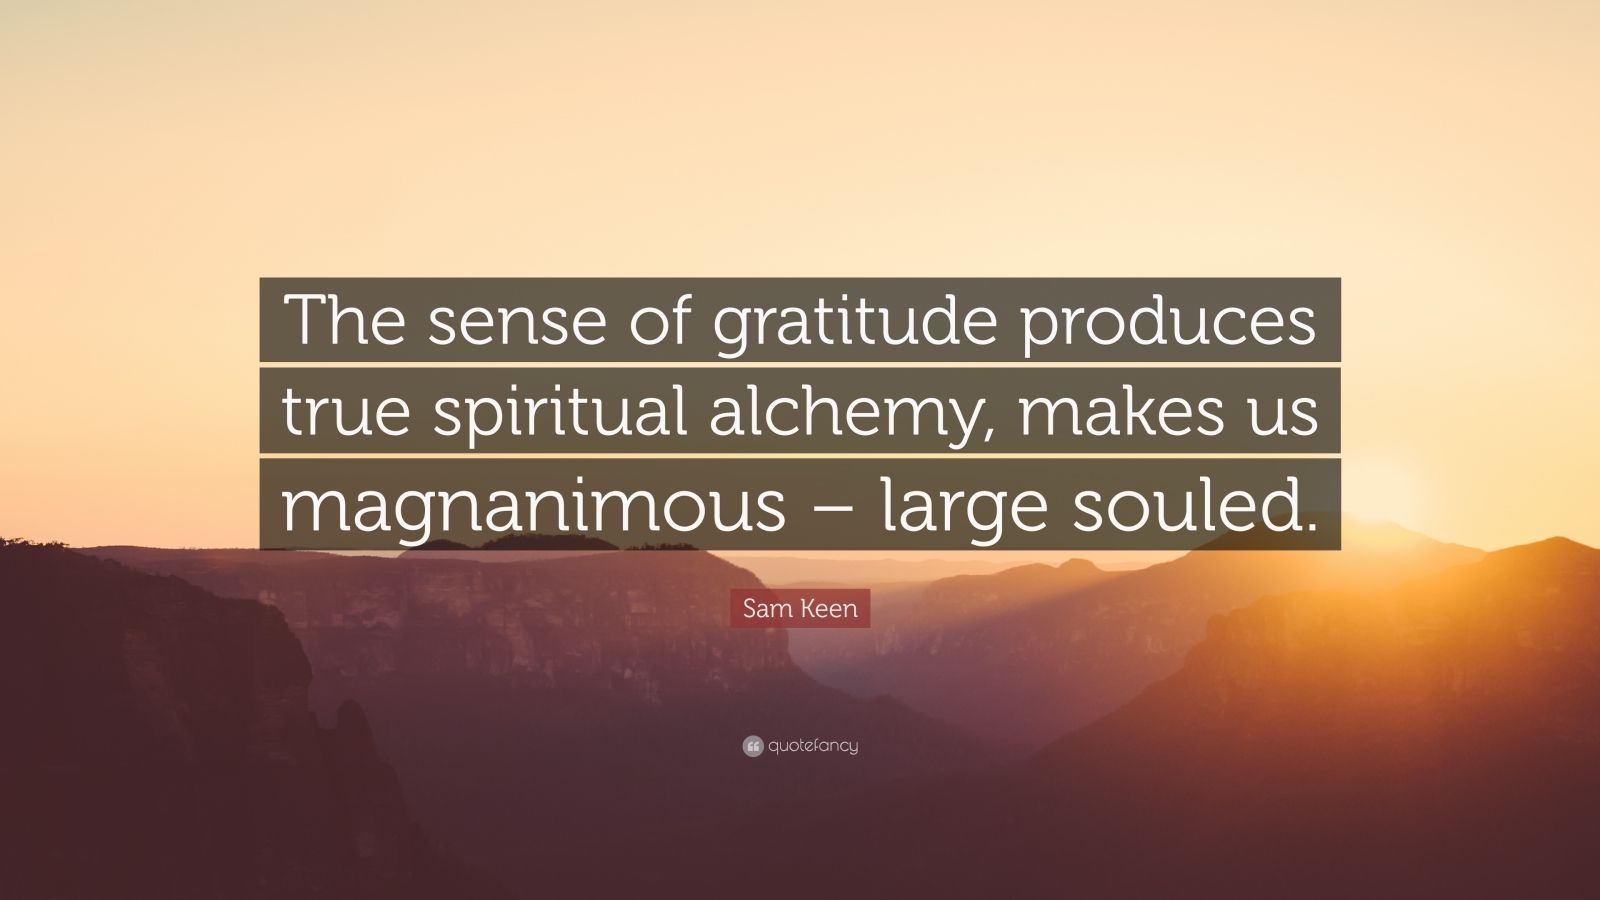 Sam Keen Quote: "The sense of gratitude produces true spiritual alchemy, makes us magnanimous ...